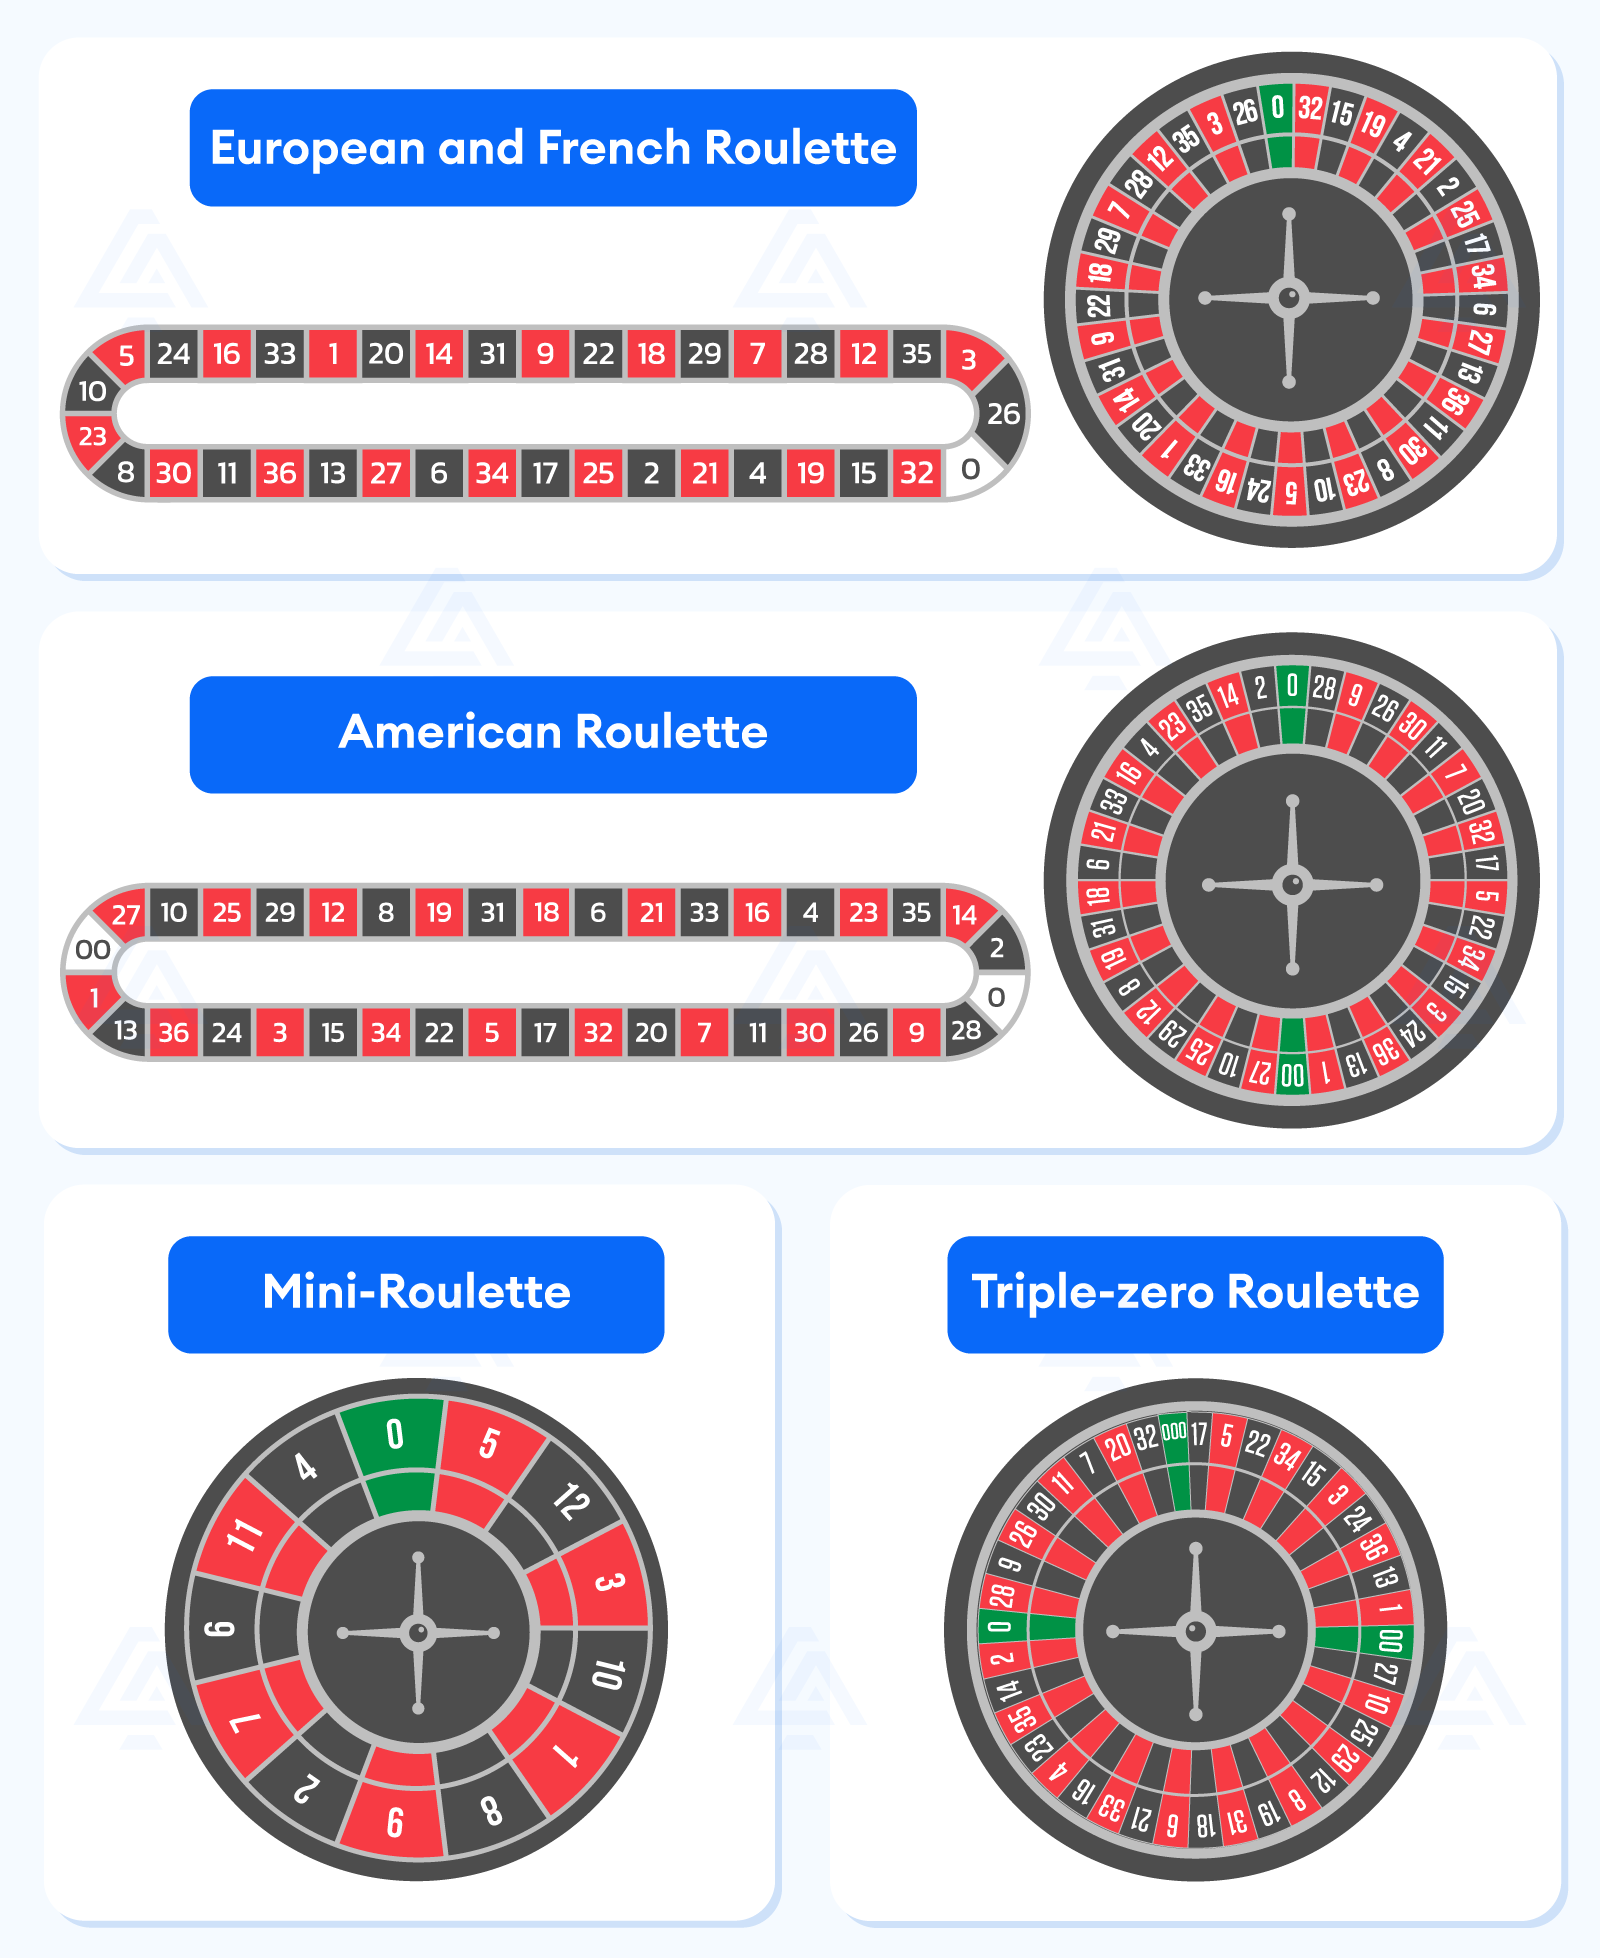 Types of the Roulette wheel - European, Frech, American, Mini-Roulette, Triple-zero